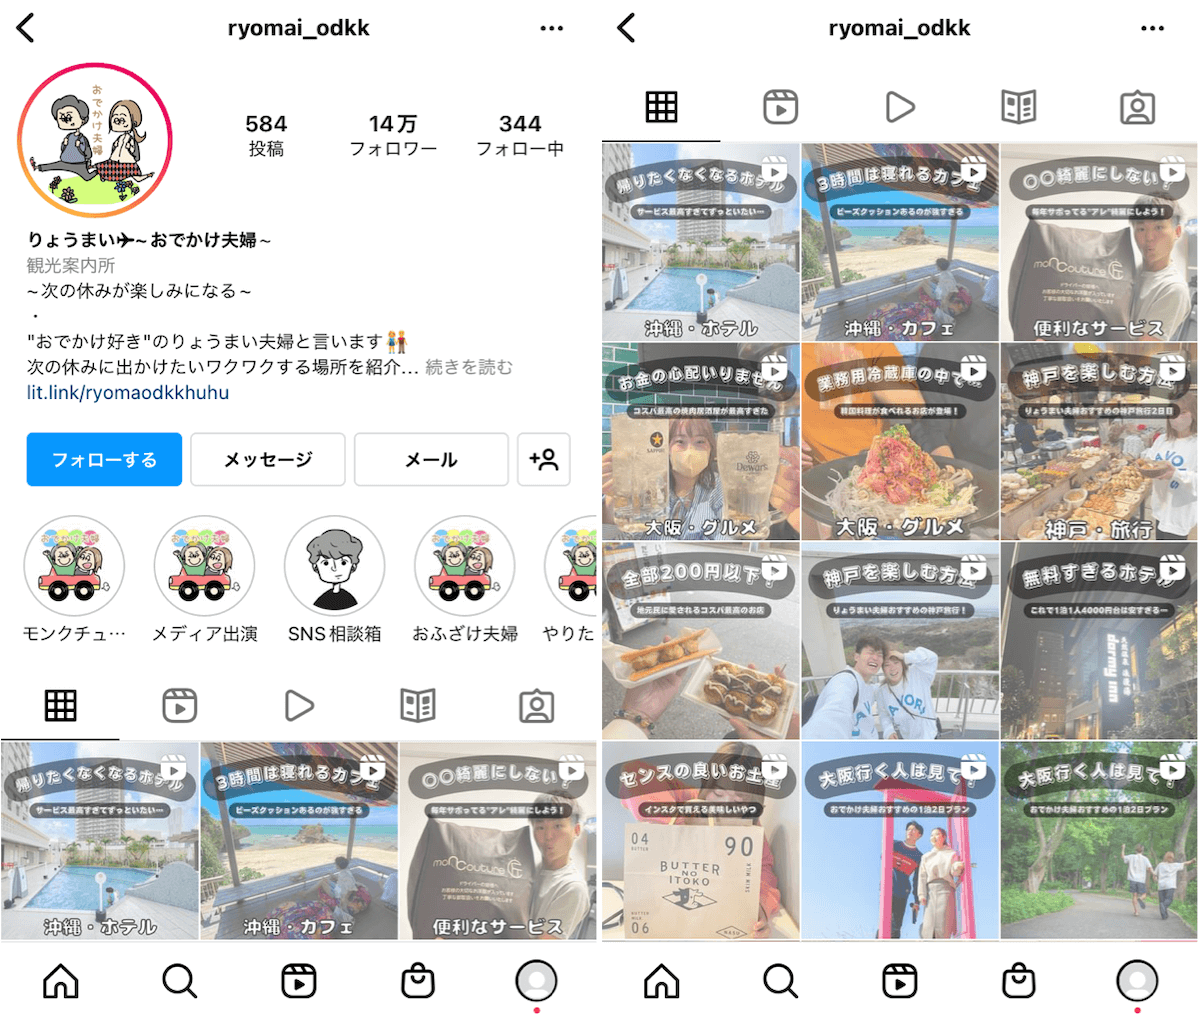 instagram-influencer-hotel-ryokan-ryomai_odkk